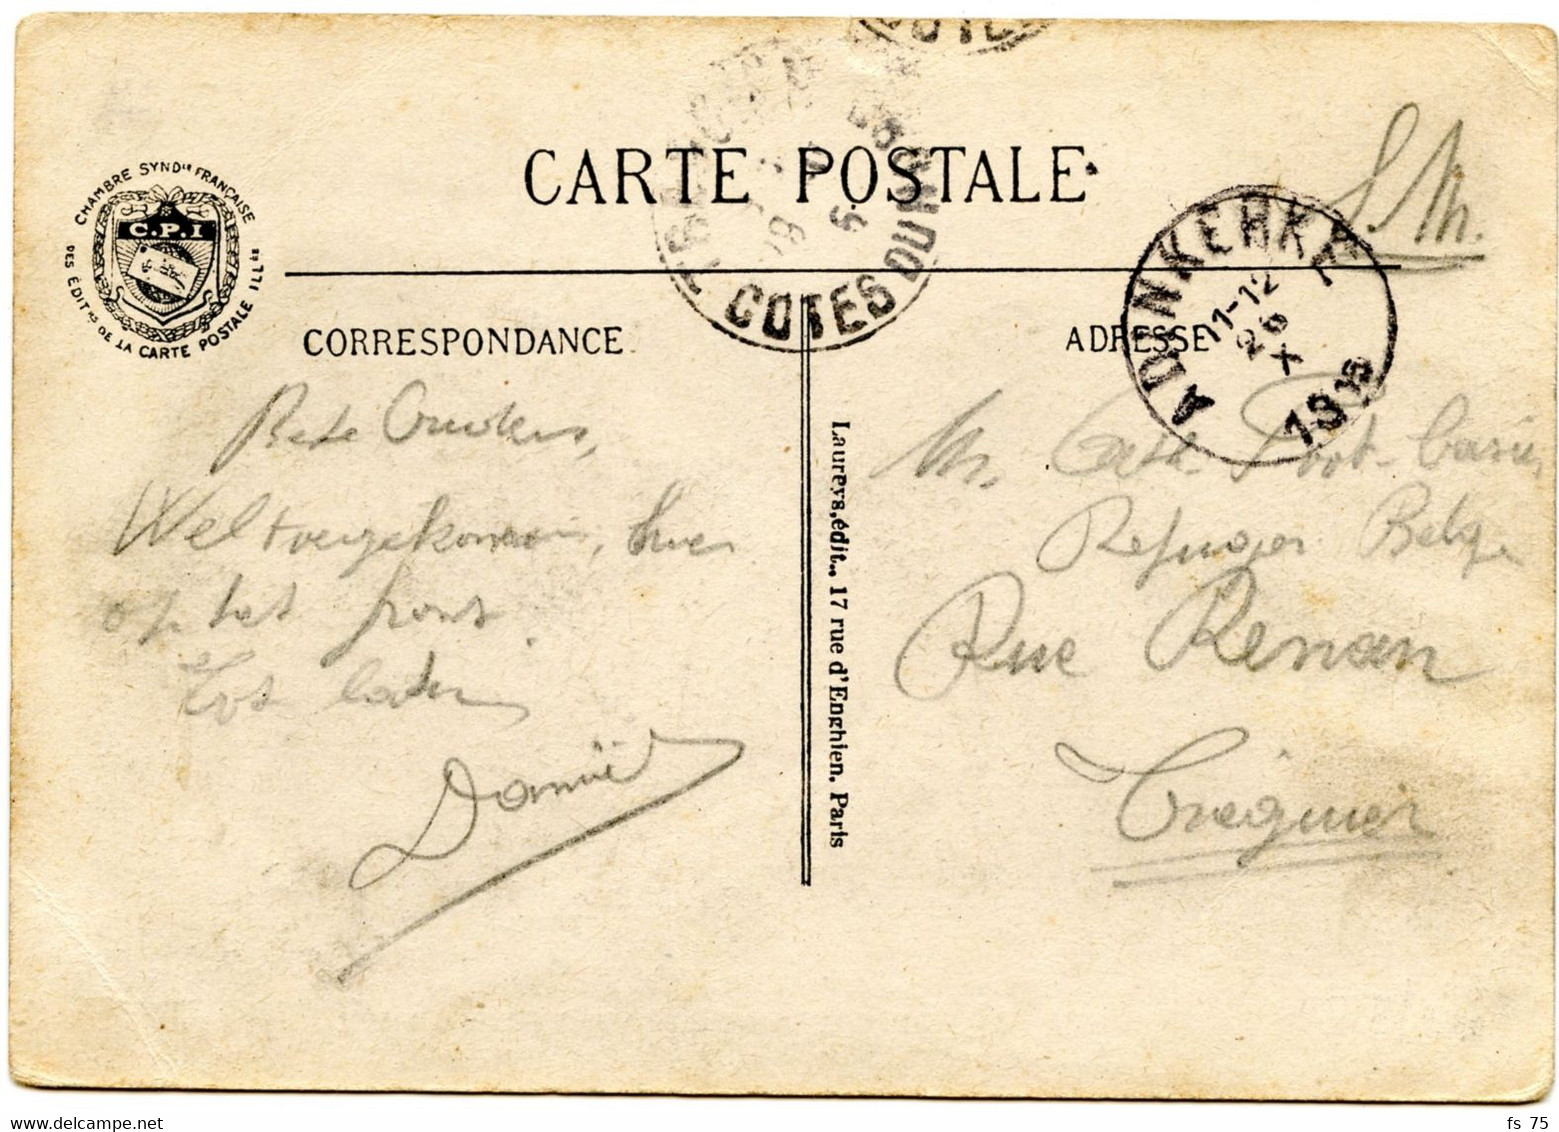 BELGIQUE - SIMPLE CERCLE ADINKERKE SUR CARTE POSTALE EN FRANCHISE, 1915 - Not Occupied Zone